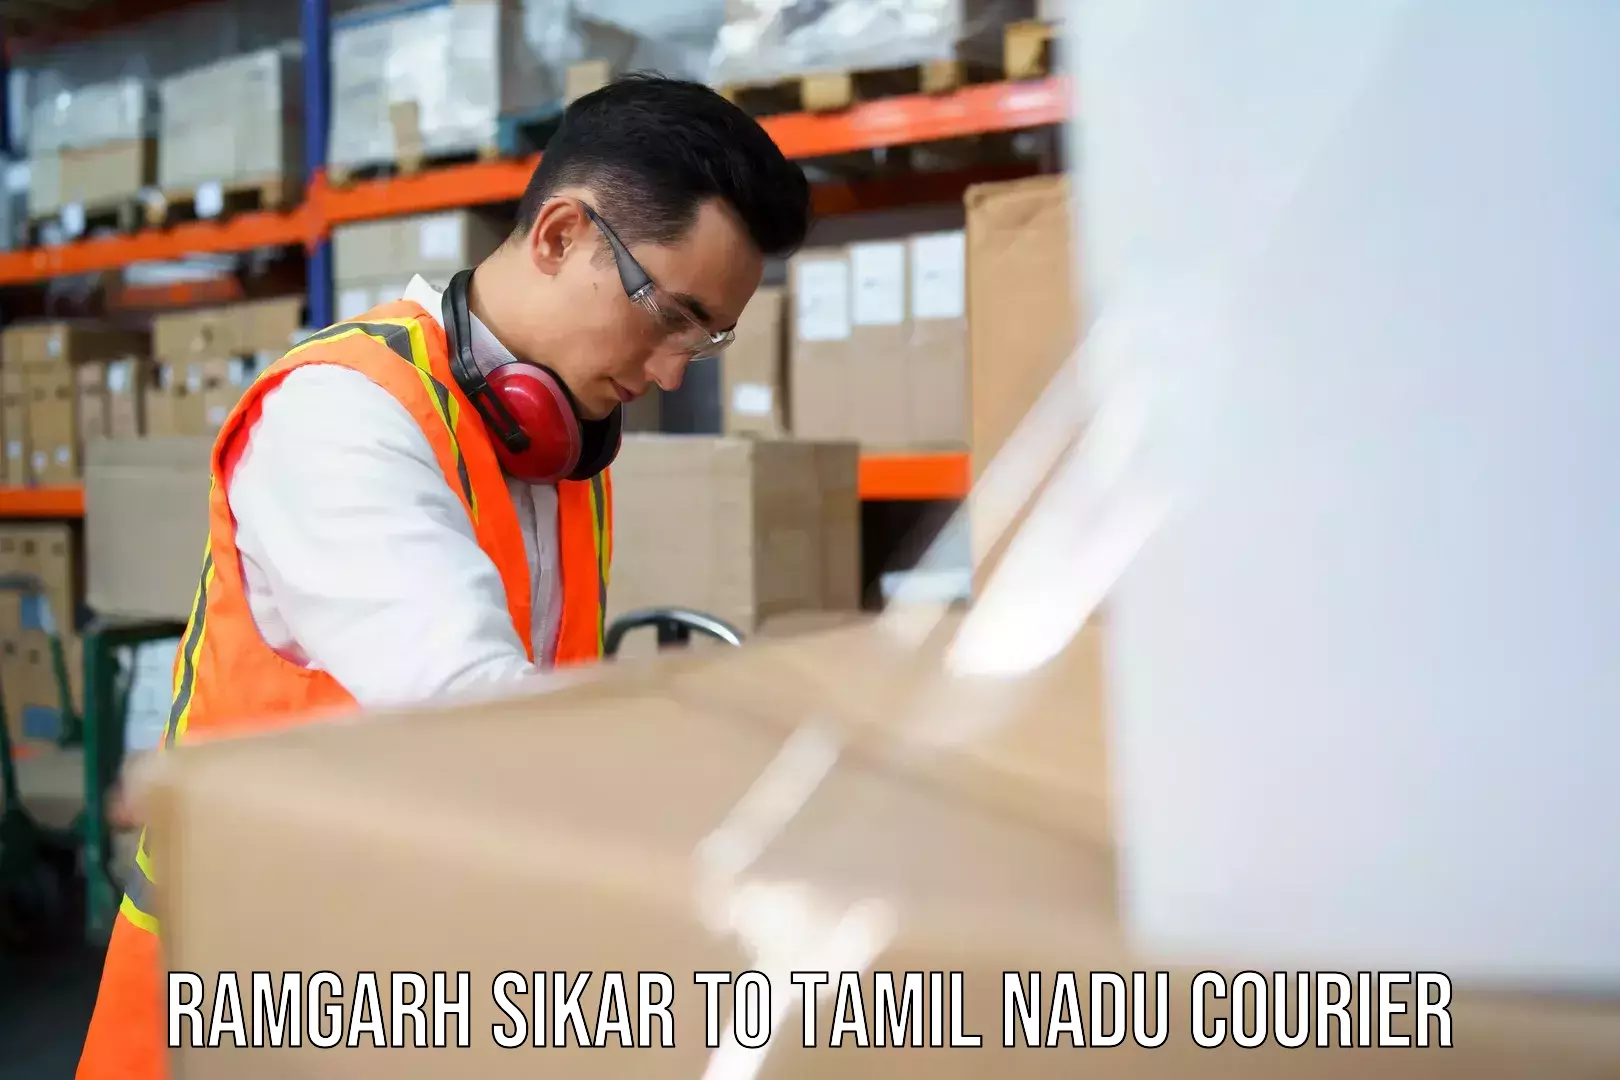 Advanced shipping network Ramgarh Sikar to Tamil Nadu